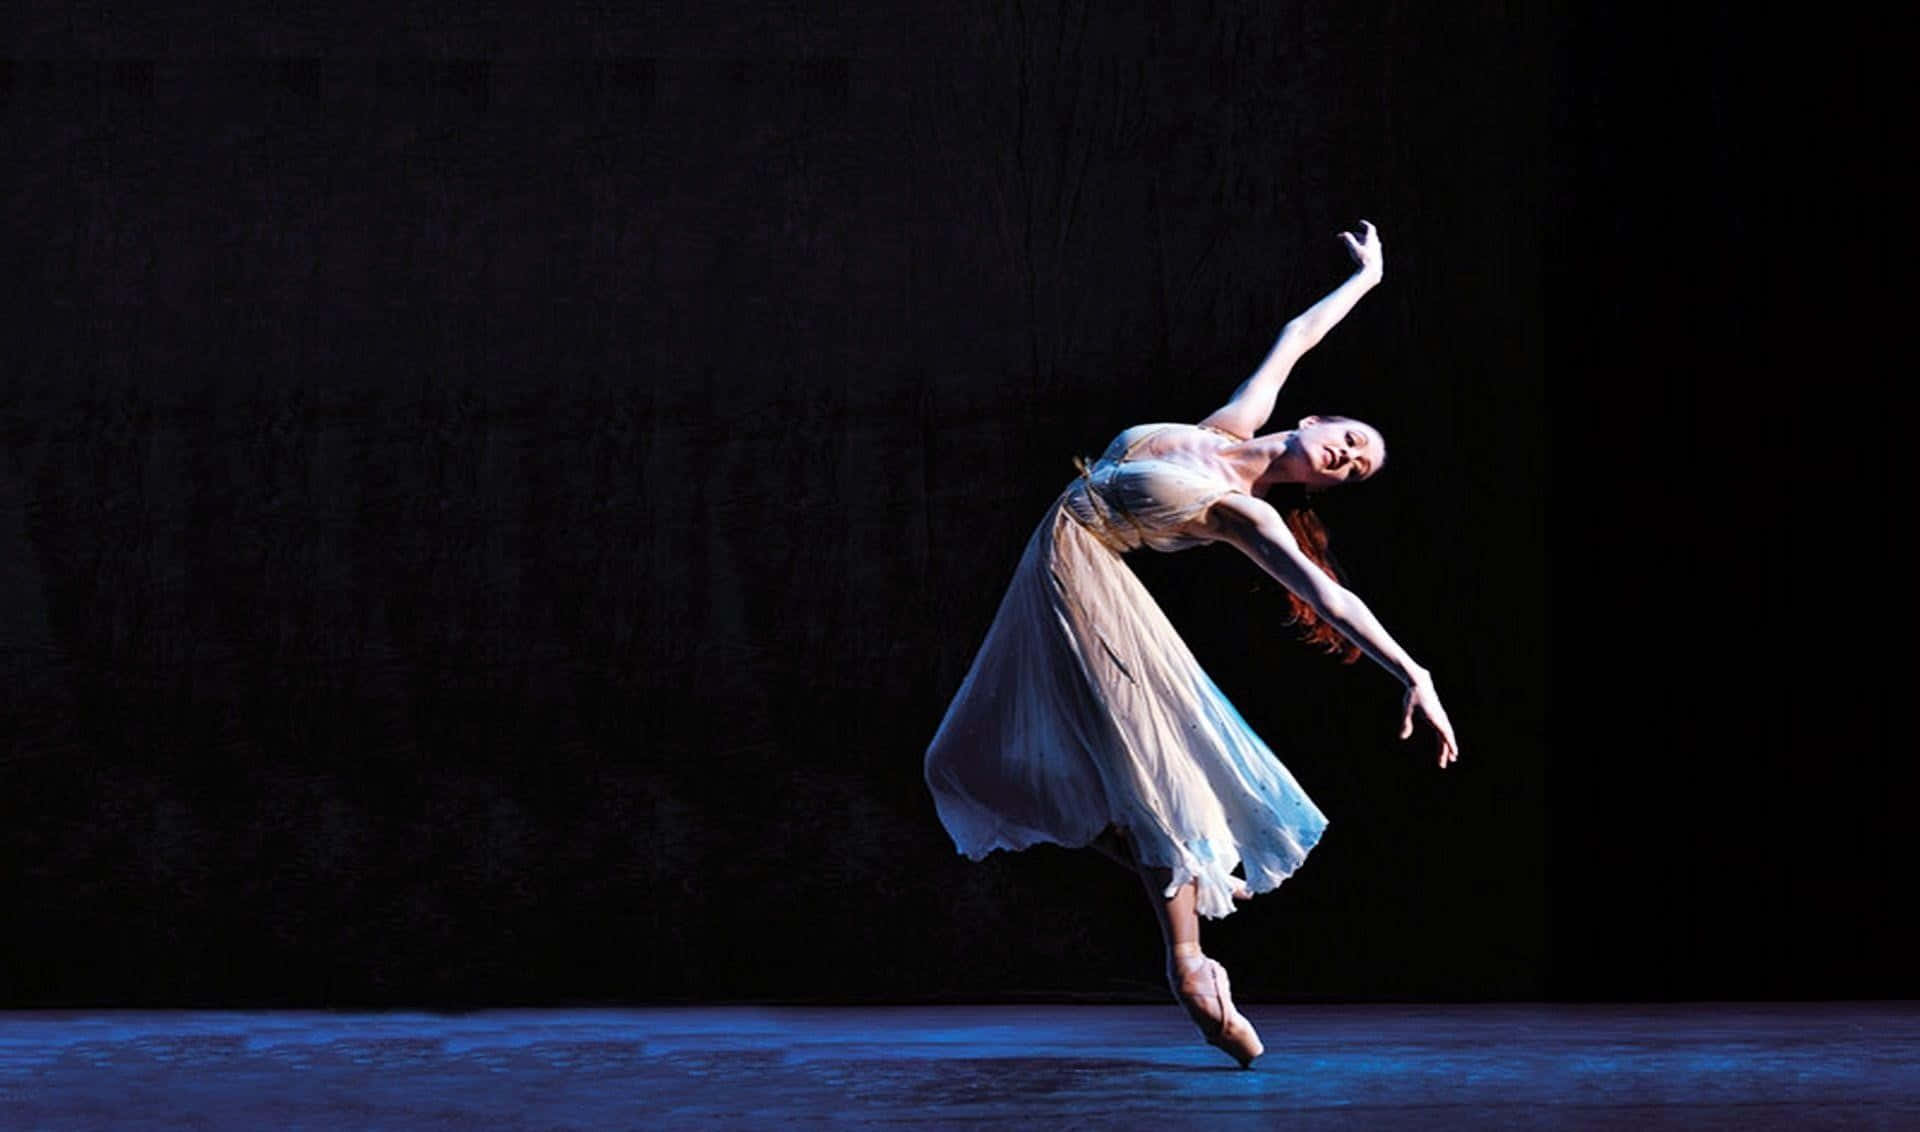 A Female Ballet Dancer In A White Dress